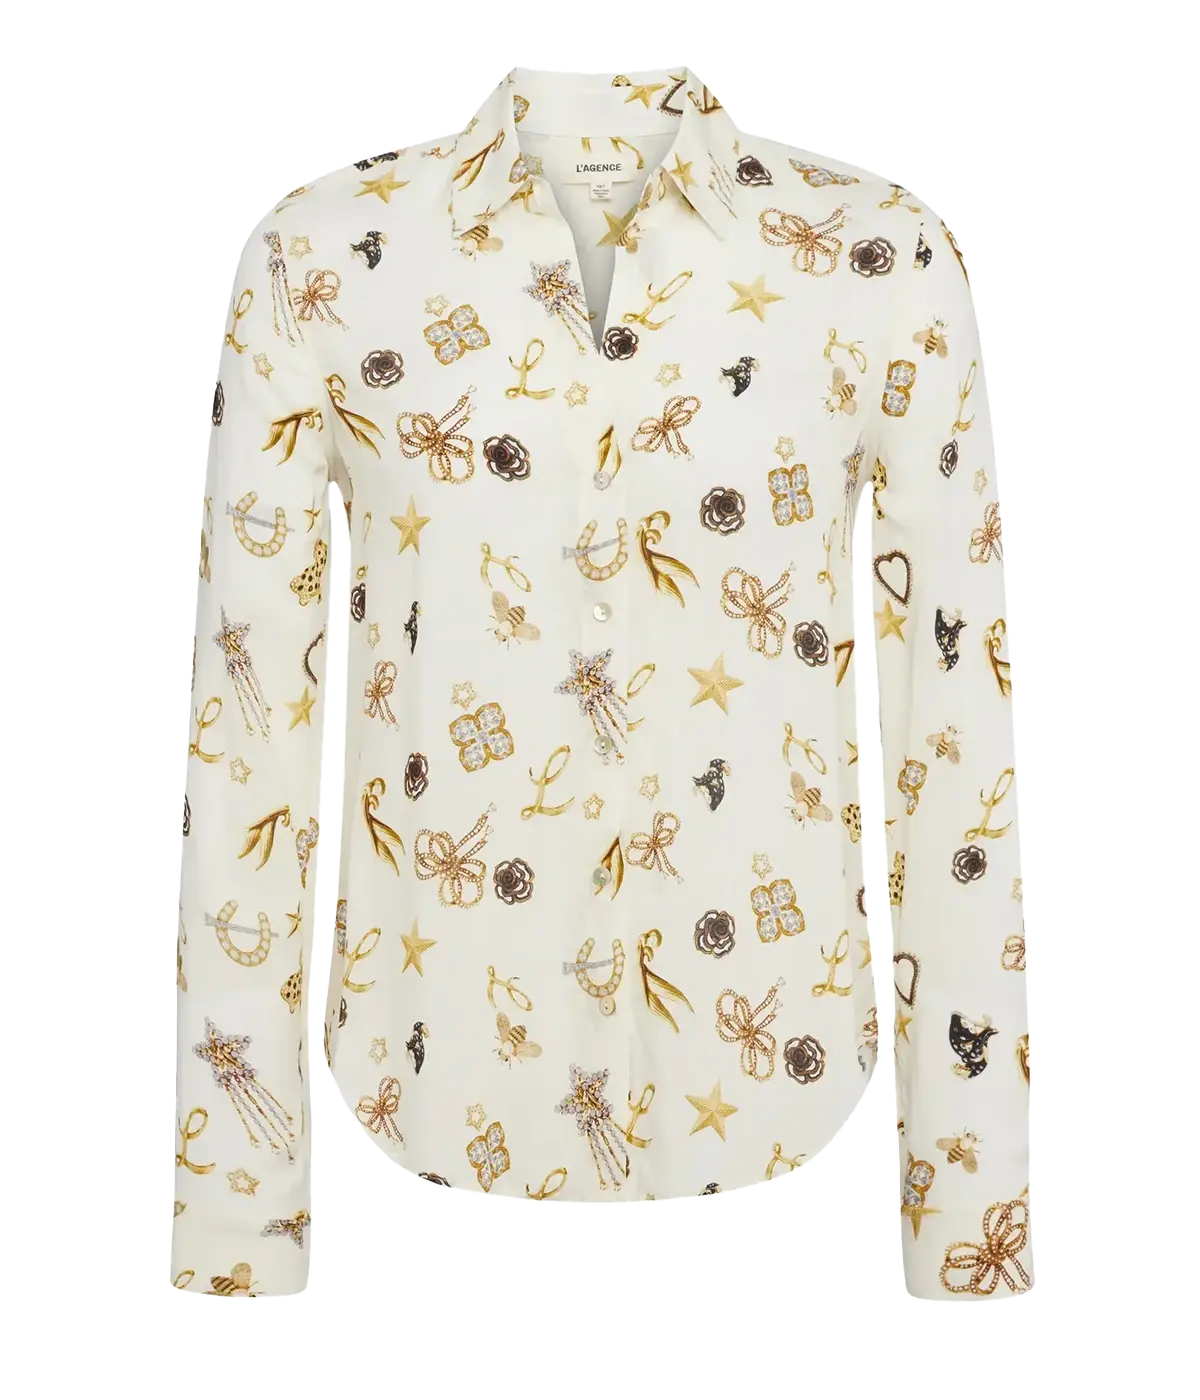 Holly Long Sleeve Shirt in Ecru Multi Brooch Print